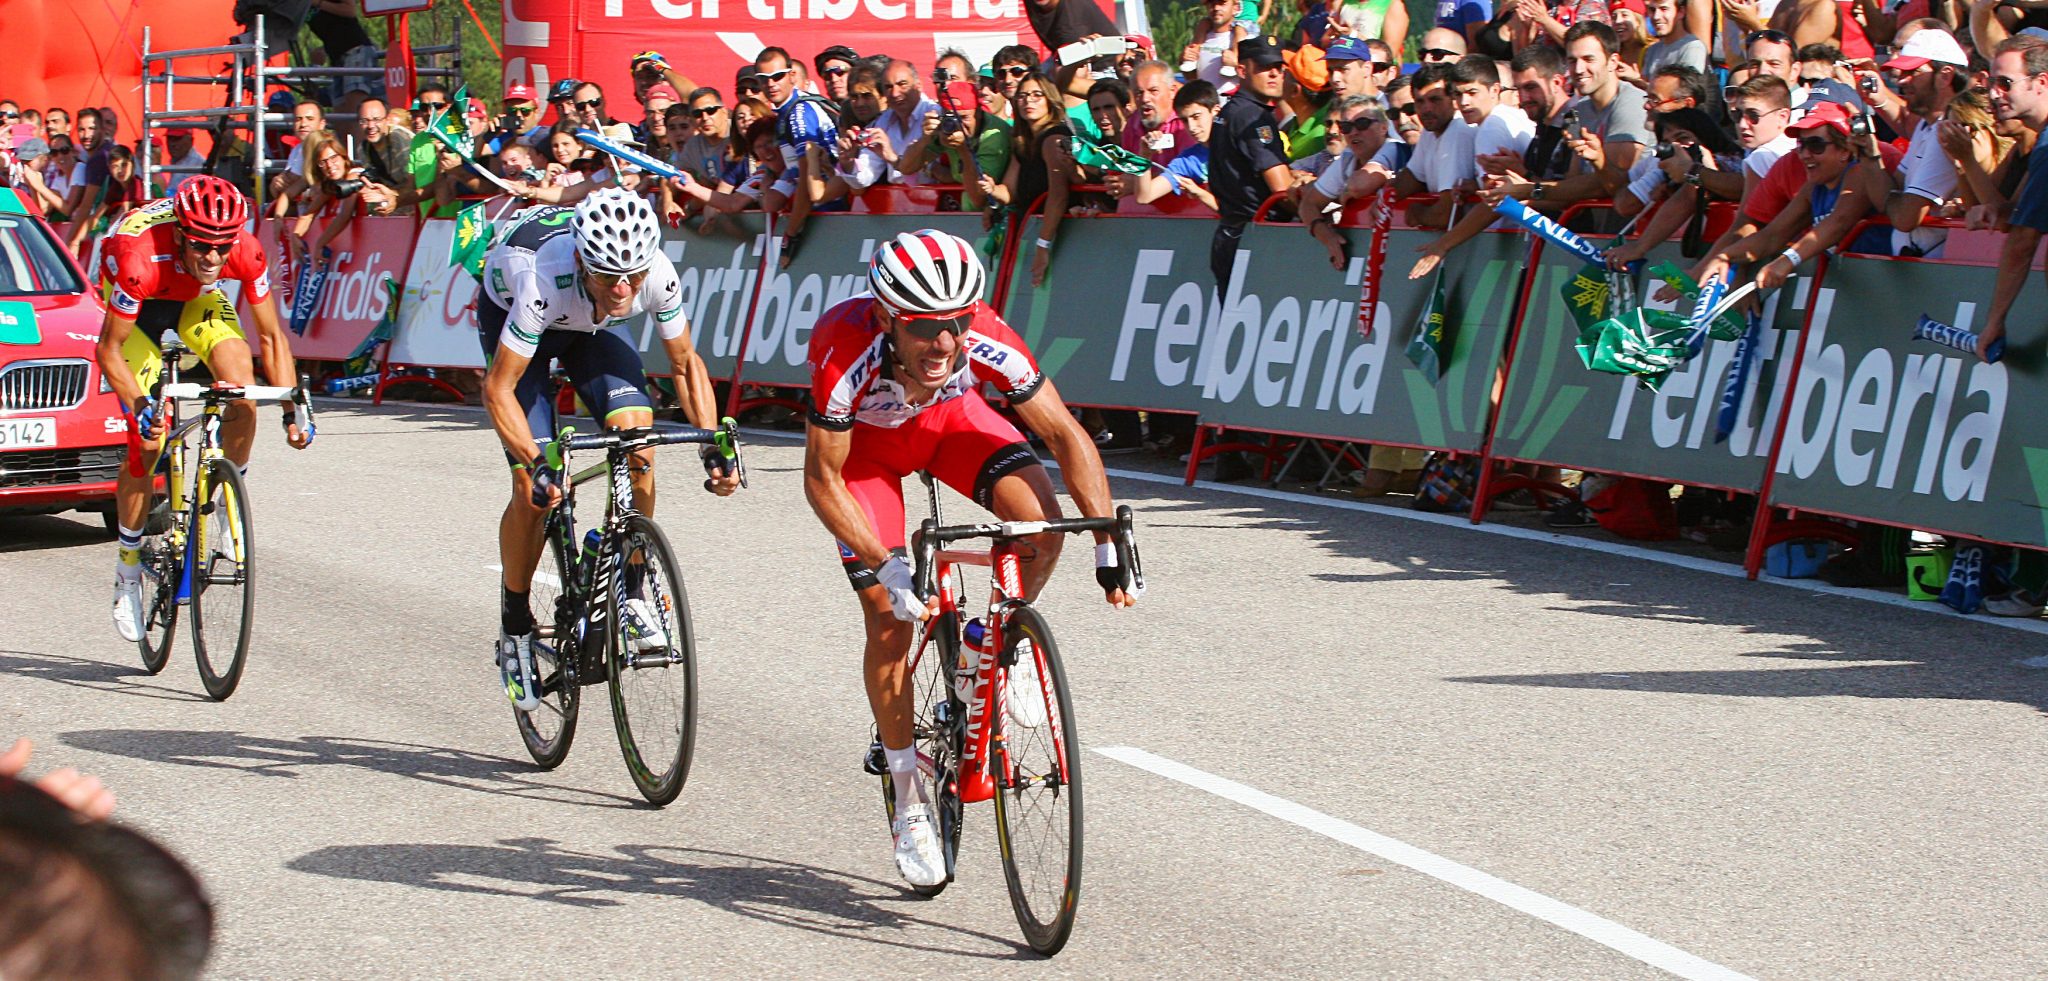 Inspiring Cycling Quotes to Motivate you to Ride - the tough Vuelta Bike Tour Perrito vs Valverde vs Contador